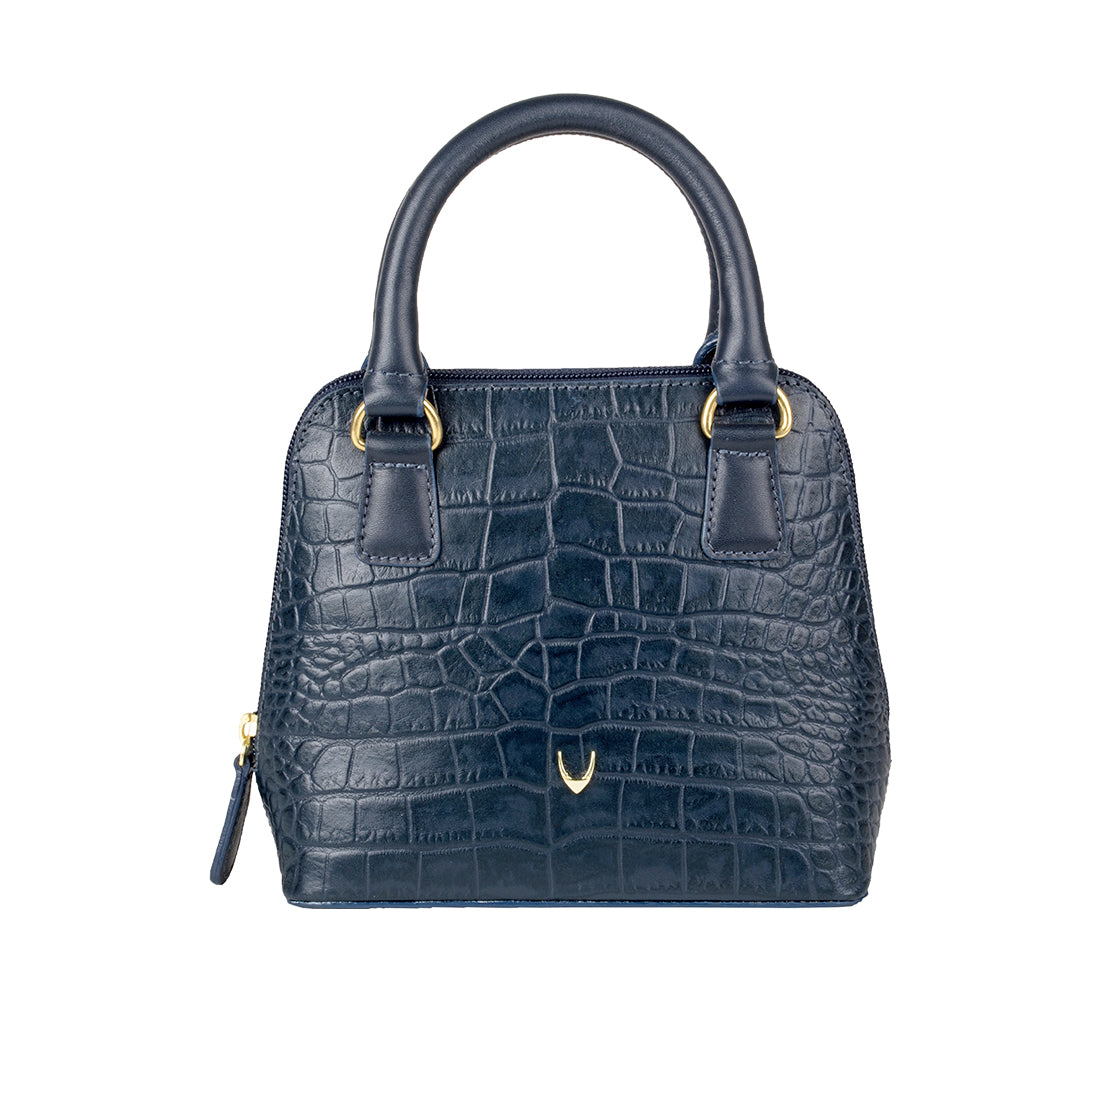 Buy Blue Sophie Mini Bag Online - Hidesign